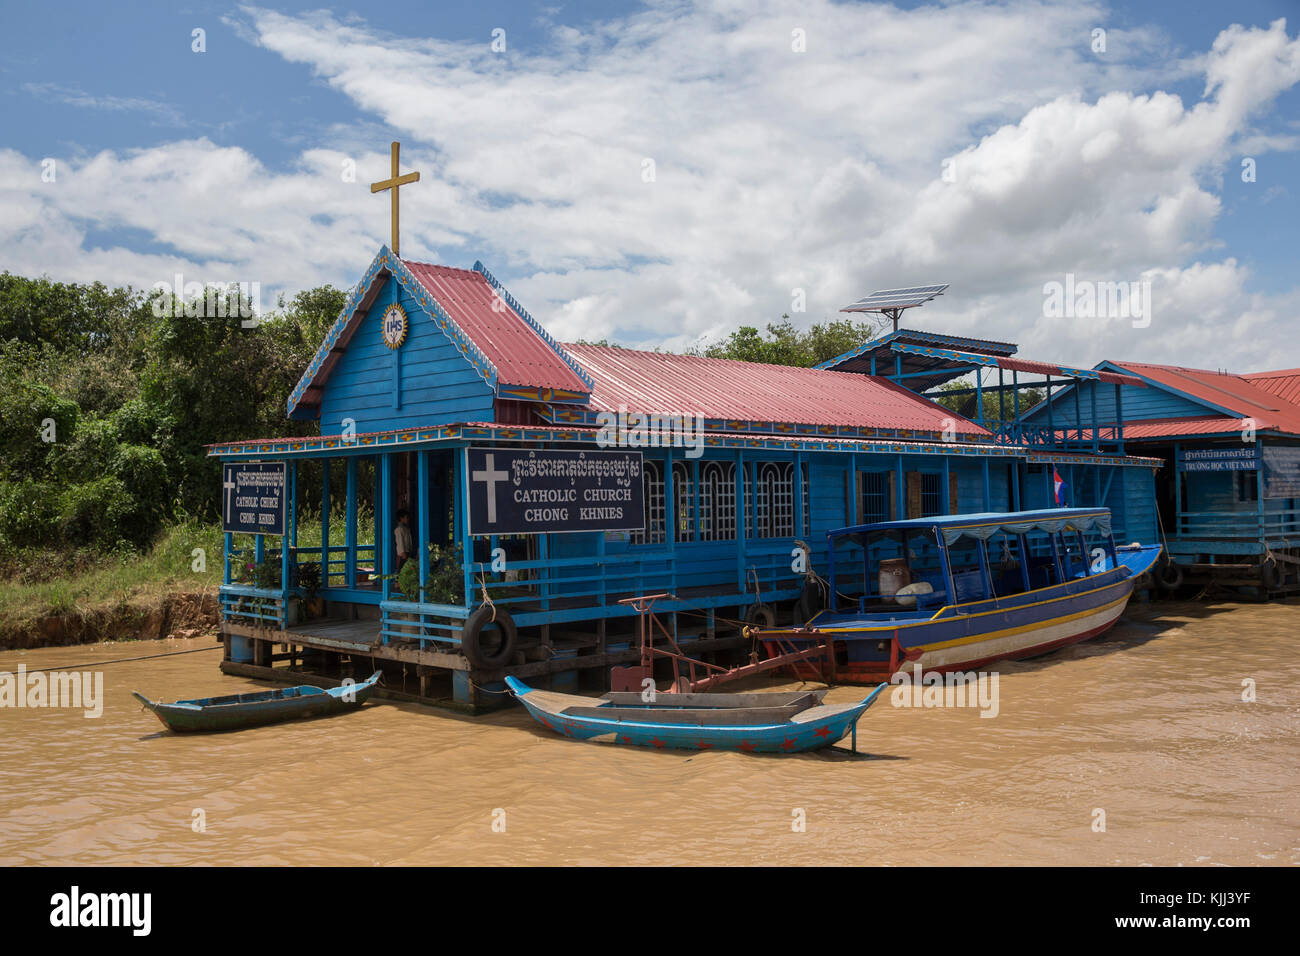 Chong Khnies floating katholische Kirche auf dem Tonle Sap See. Kambodscha. Stockfoto